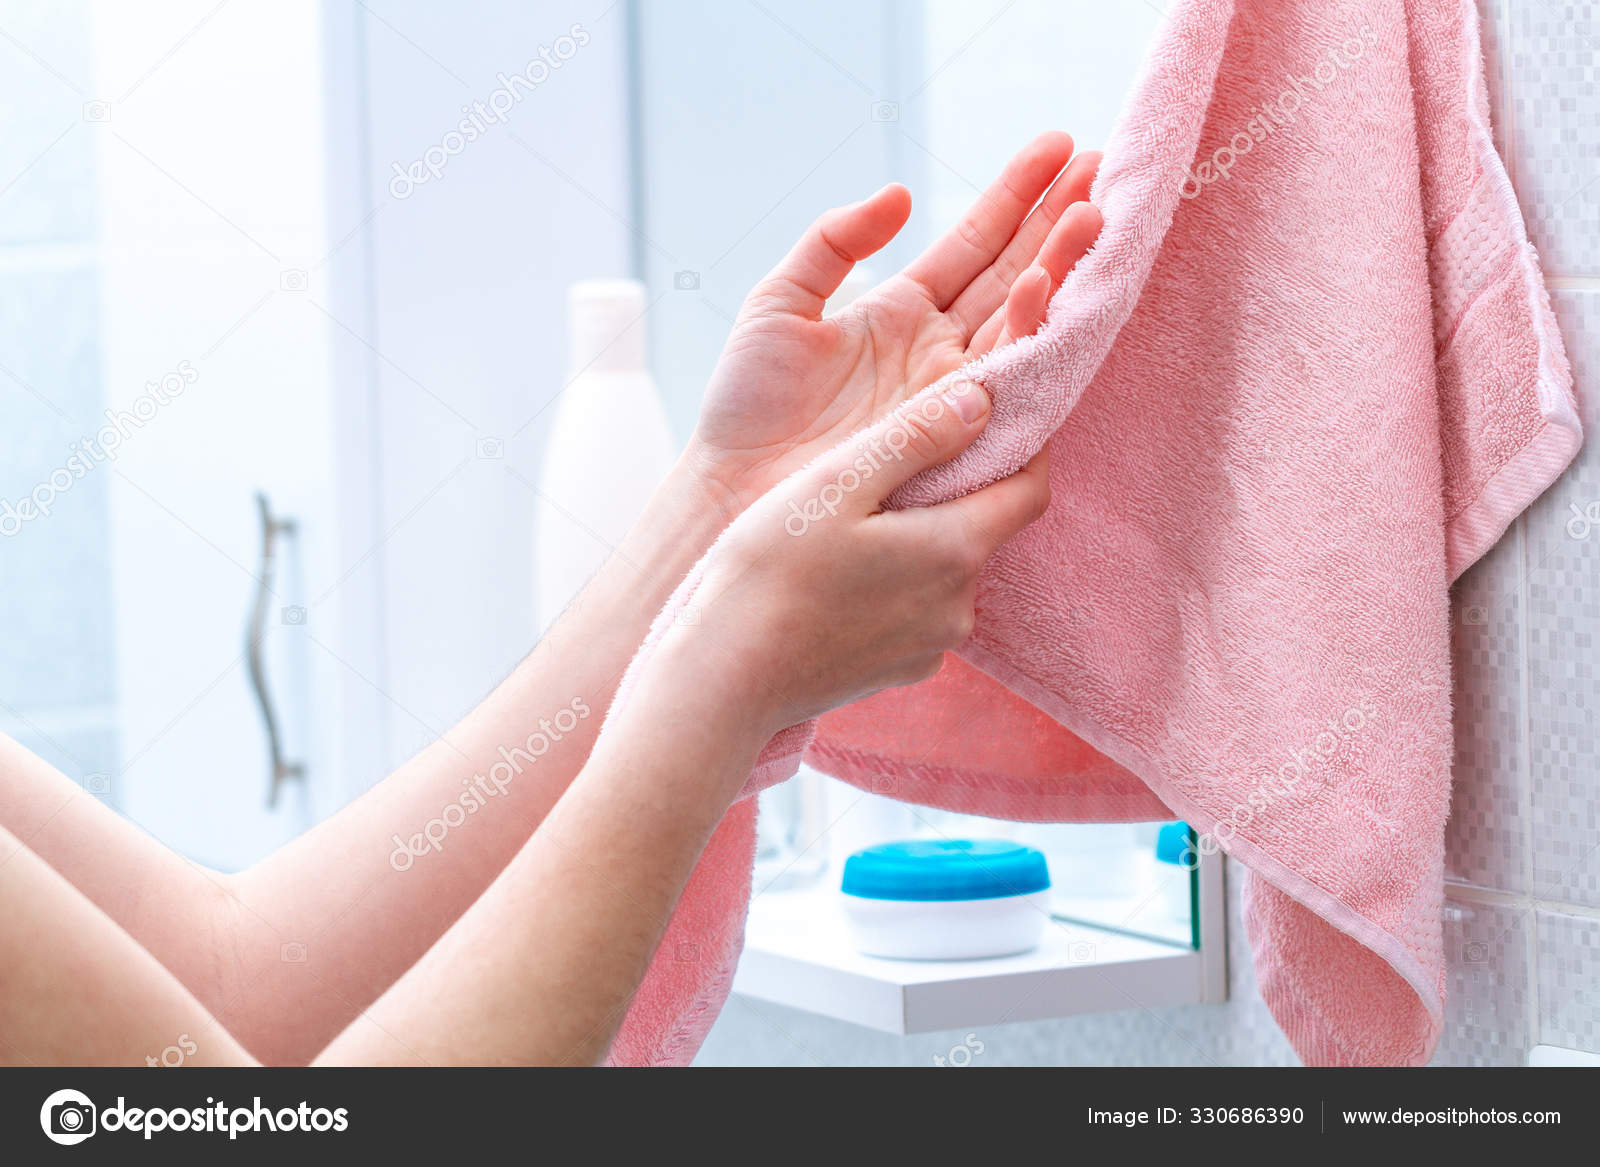 https://st3.depositphotos.com/18922288/33068/i/1600/depositphotos_330686390-stock-photo-person-using-towel-wiping-hands.jpg